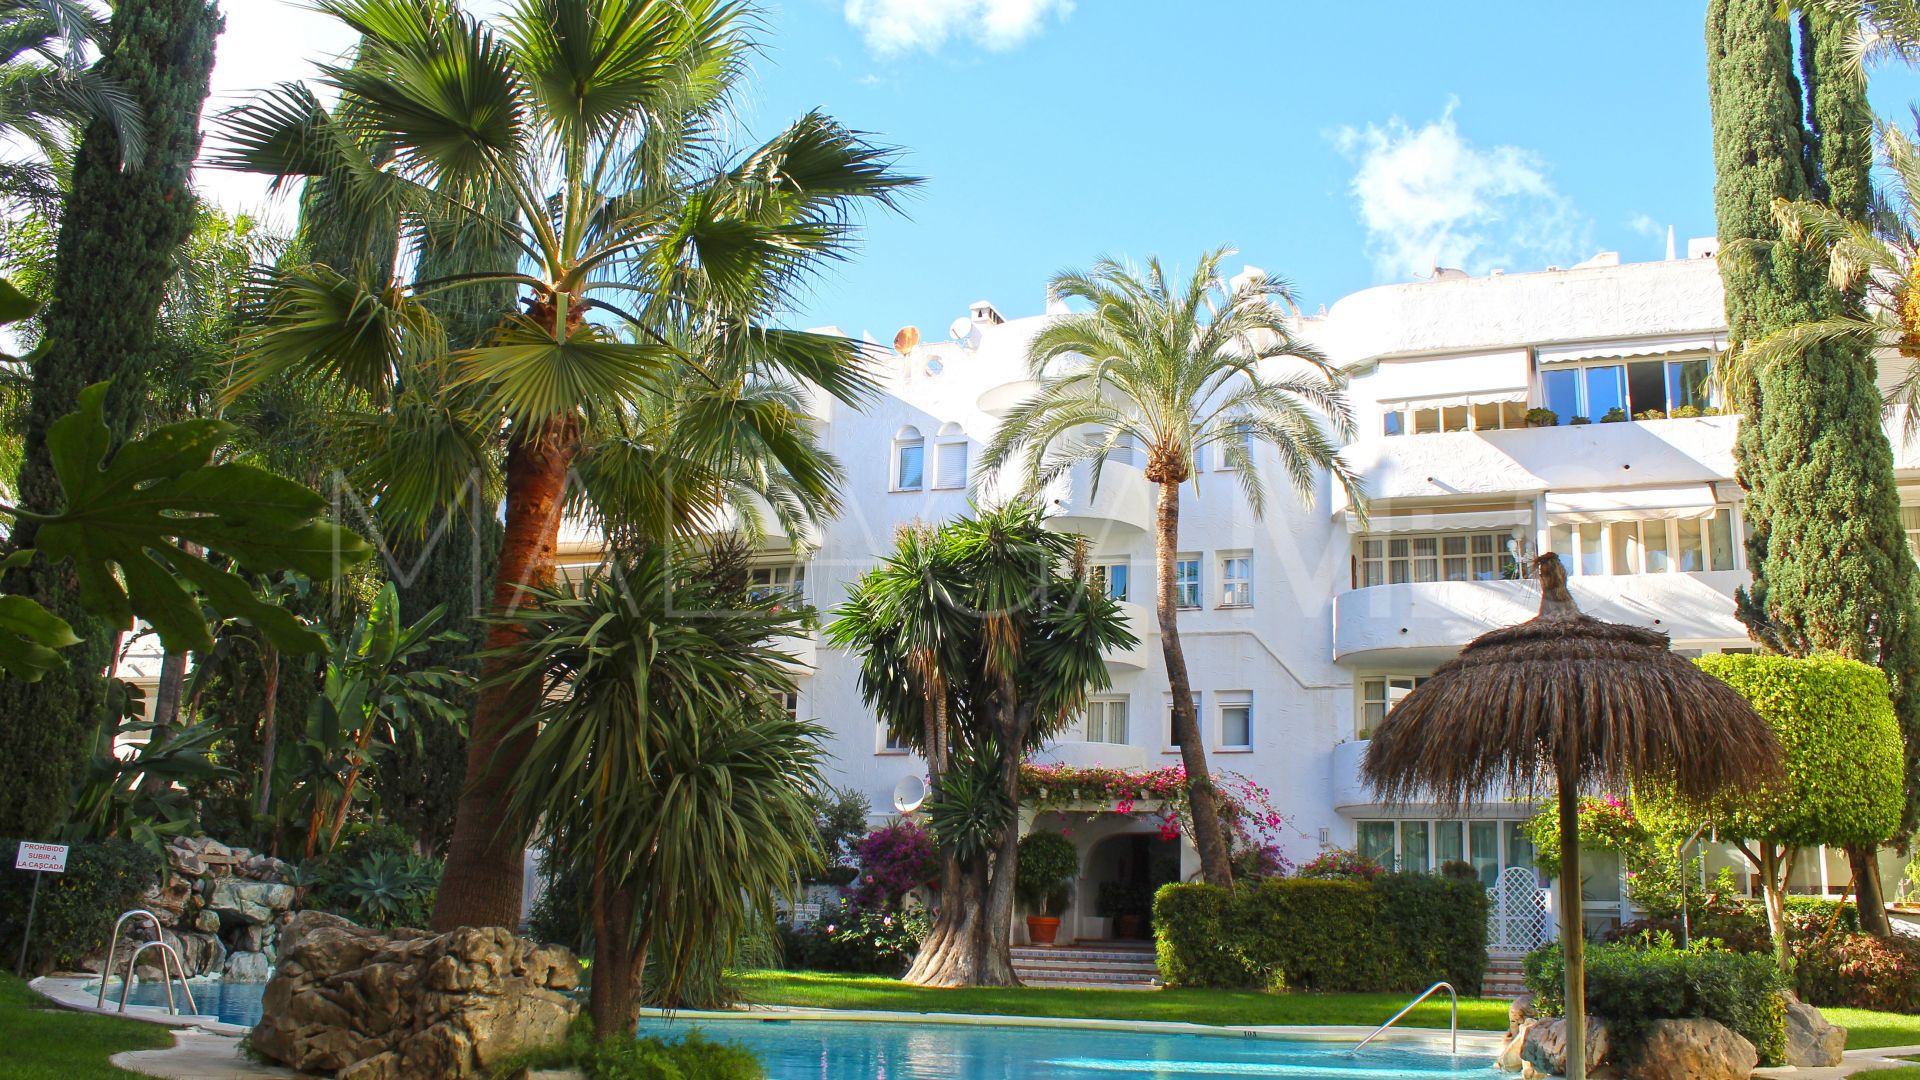 Lägenhet for sale in Marbella Real